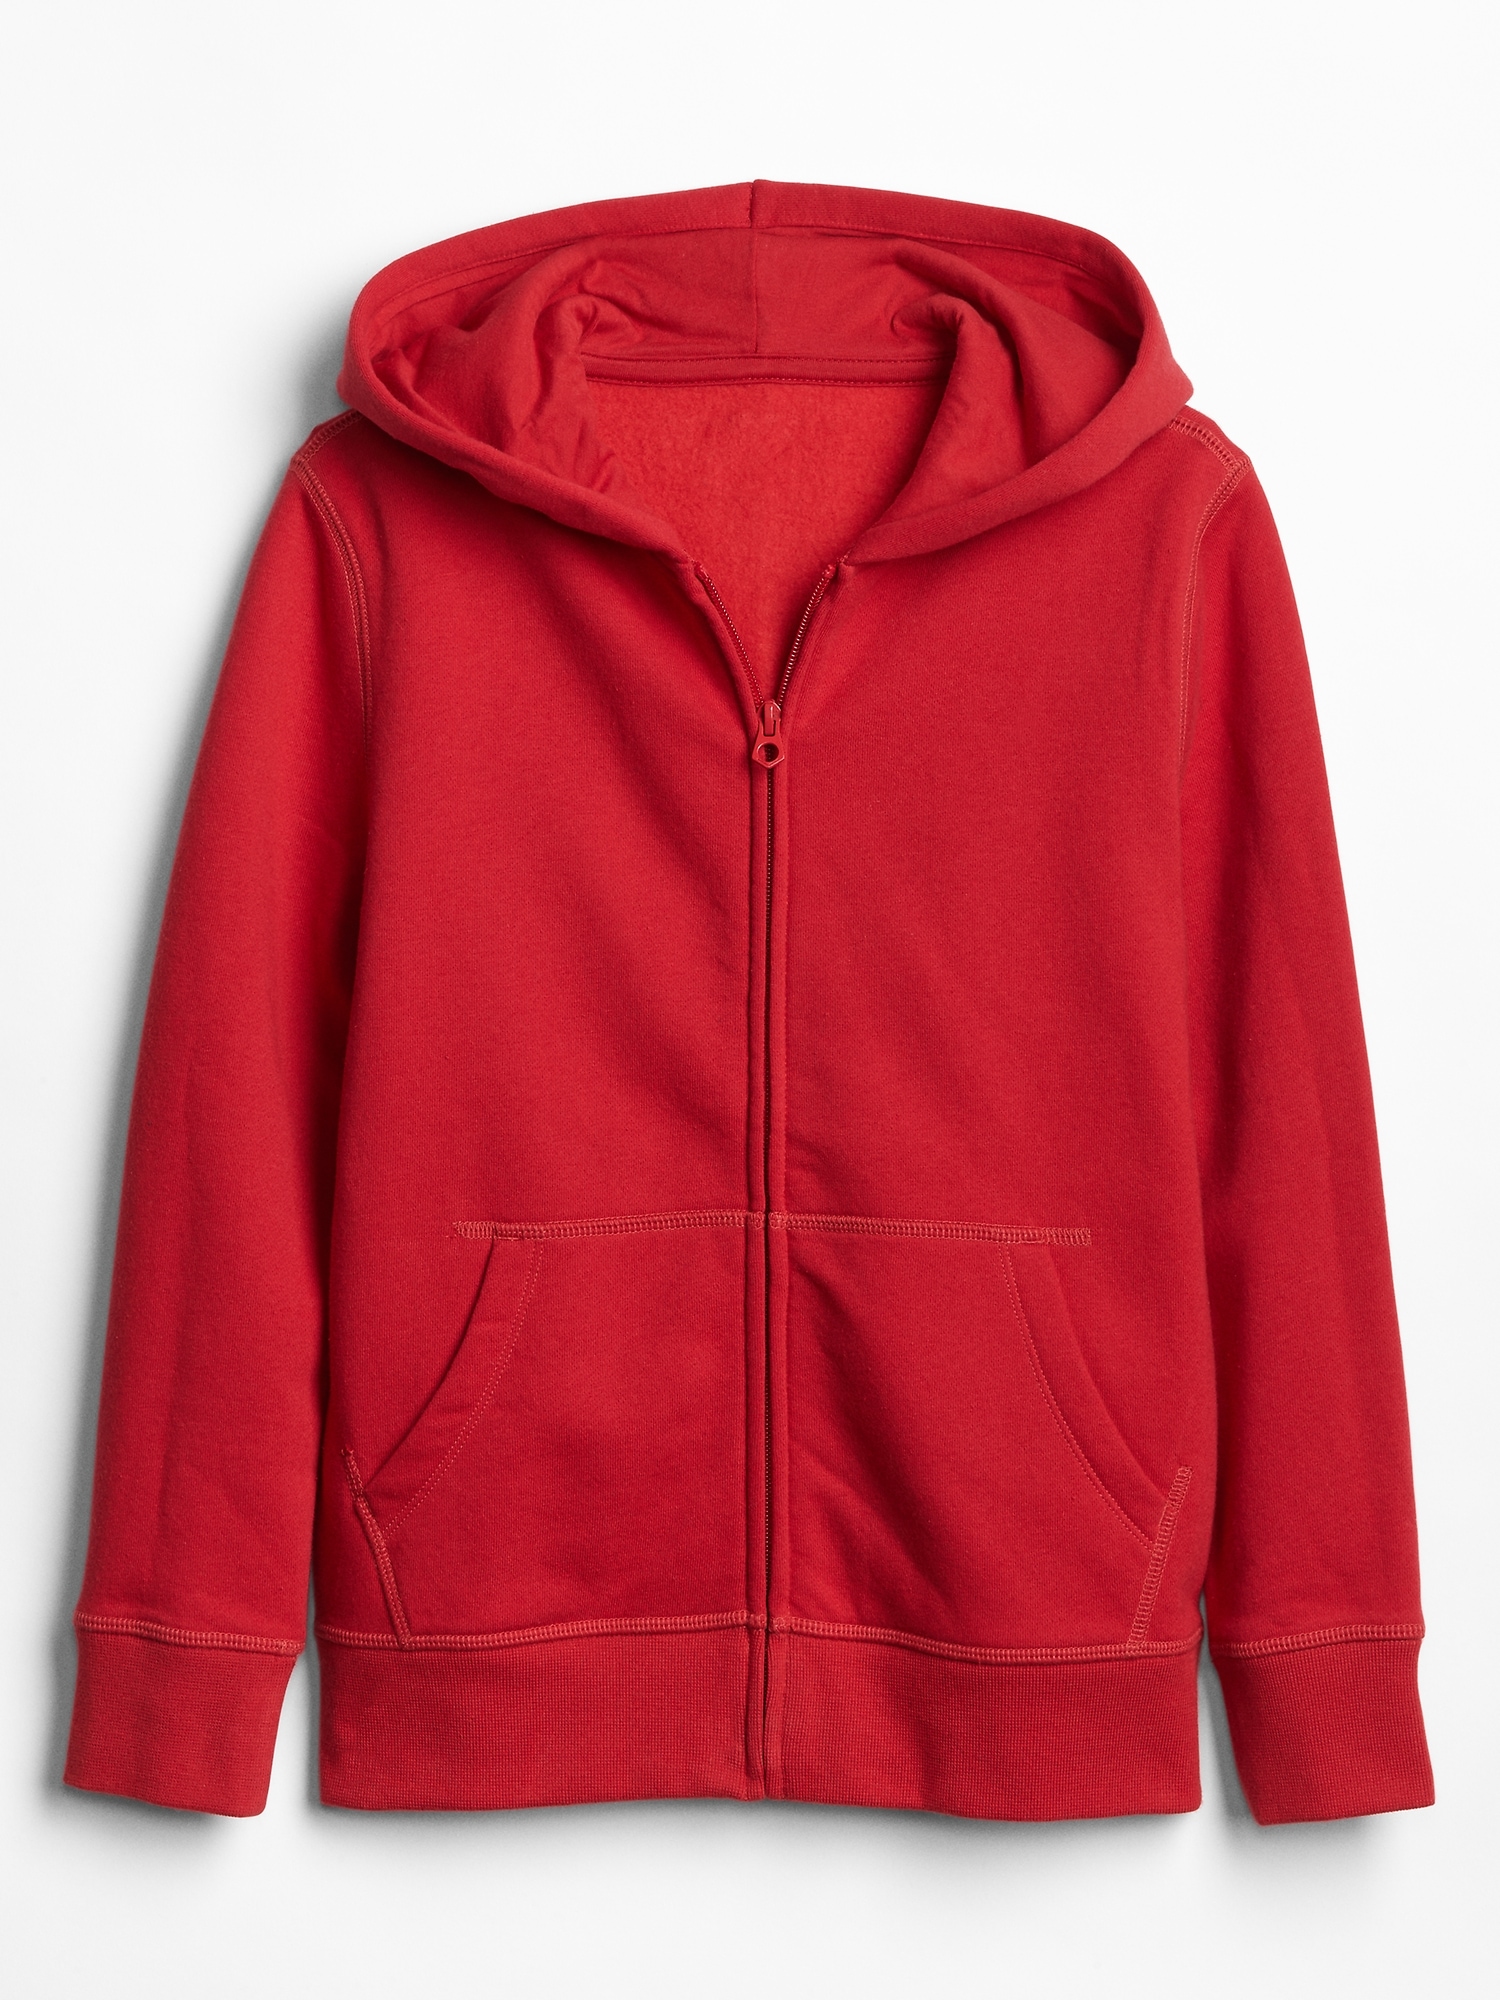 Kids Boys Unisex Plain Fleece Red Hoodie Zip Up Style Zipper Age 2-13 Years 